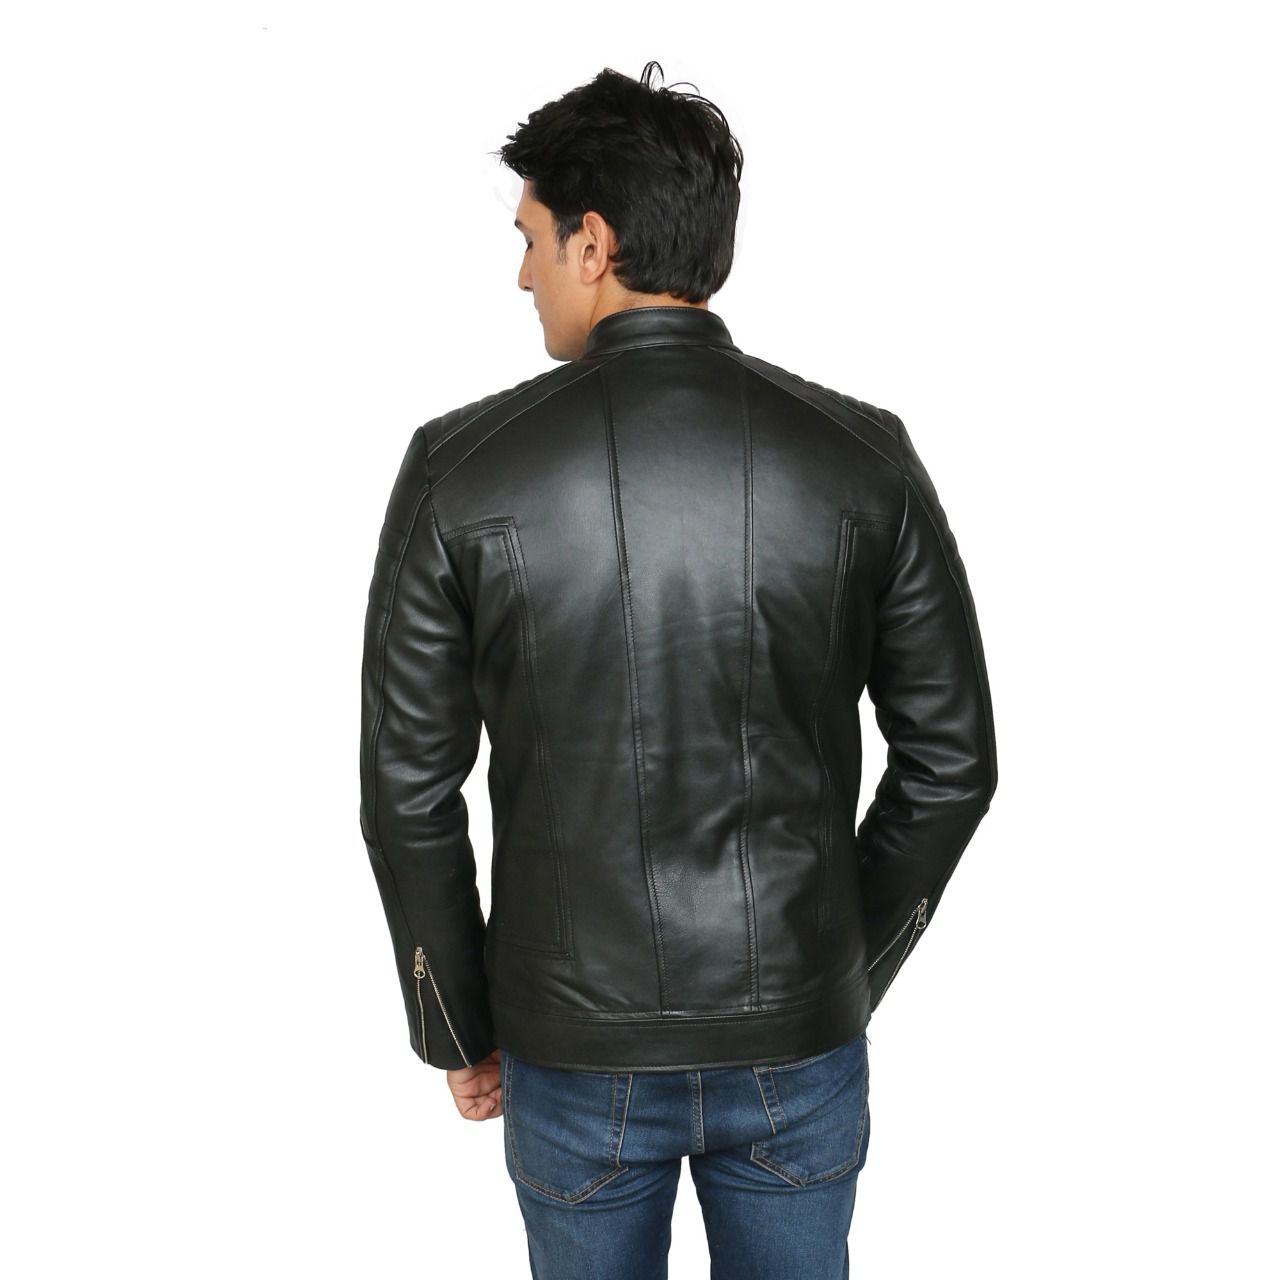 OBANI Black Leather Jacket - Buy OBANI Black Leather Jacket Online at ...